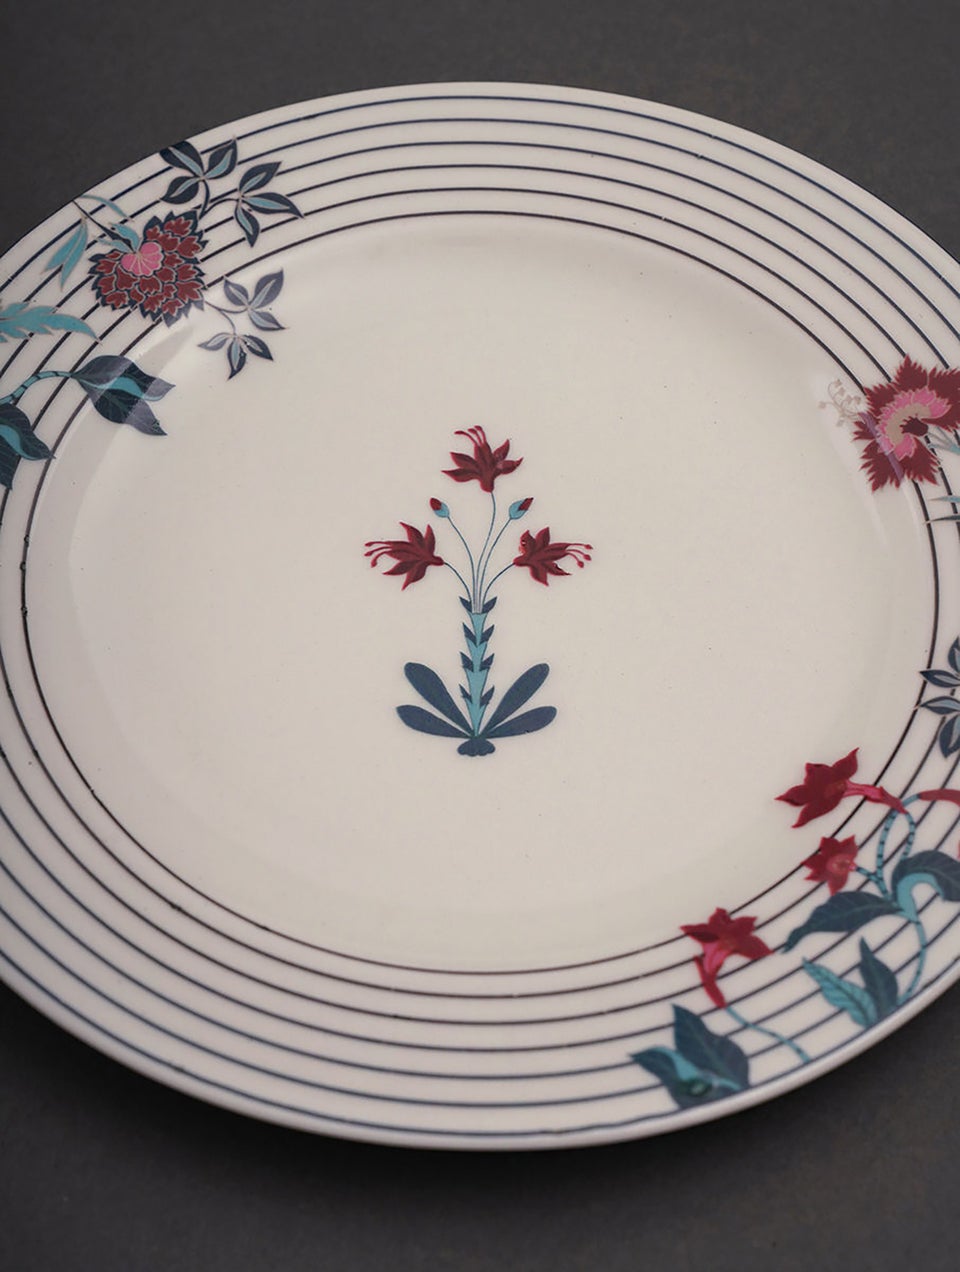 Mughal Inspired Porcelain Side Plate